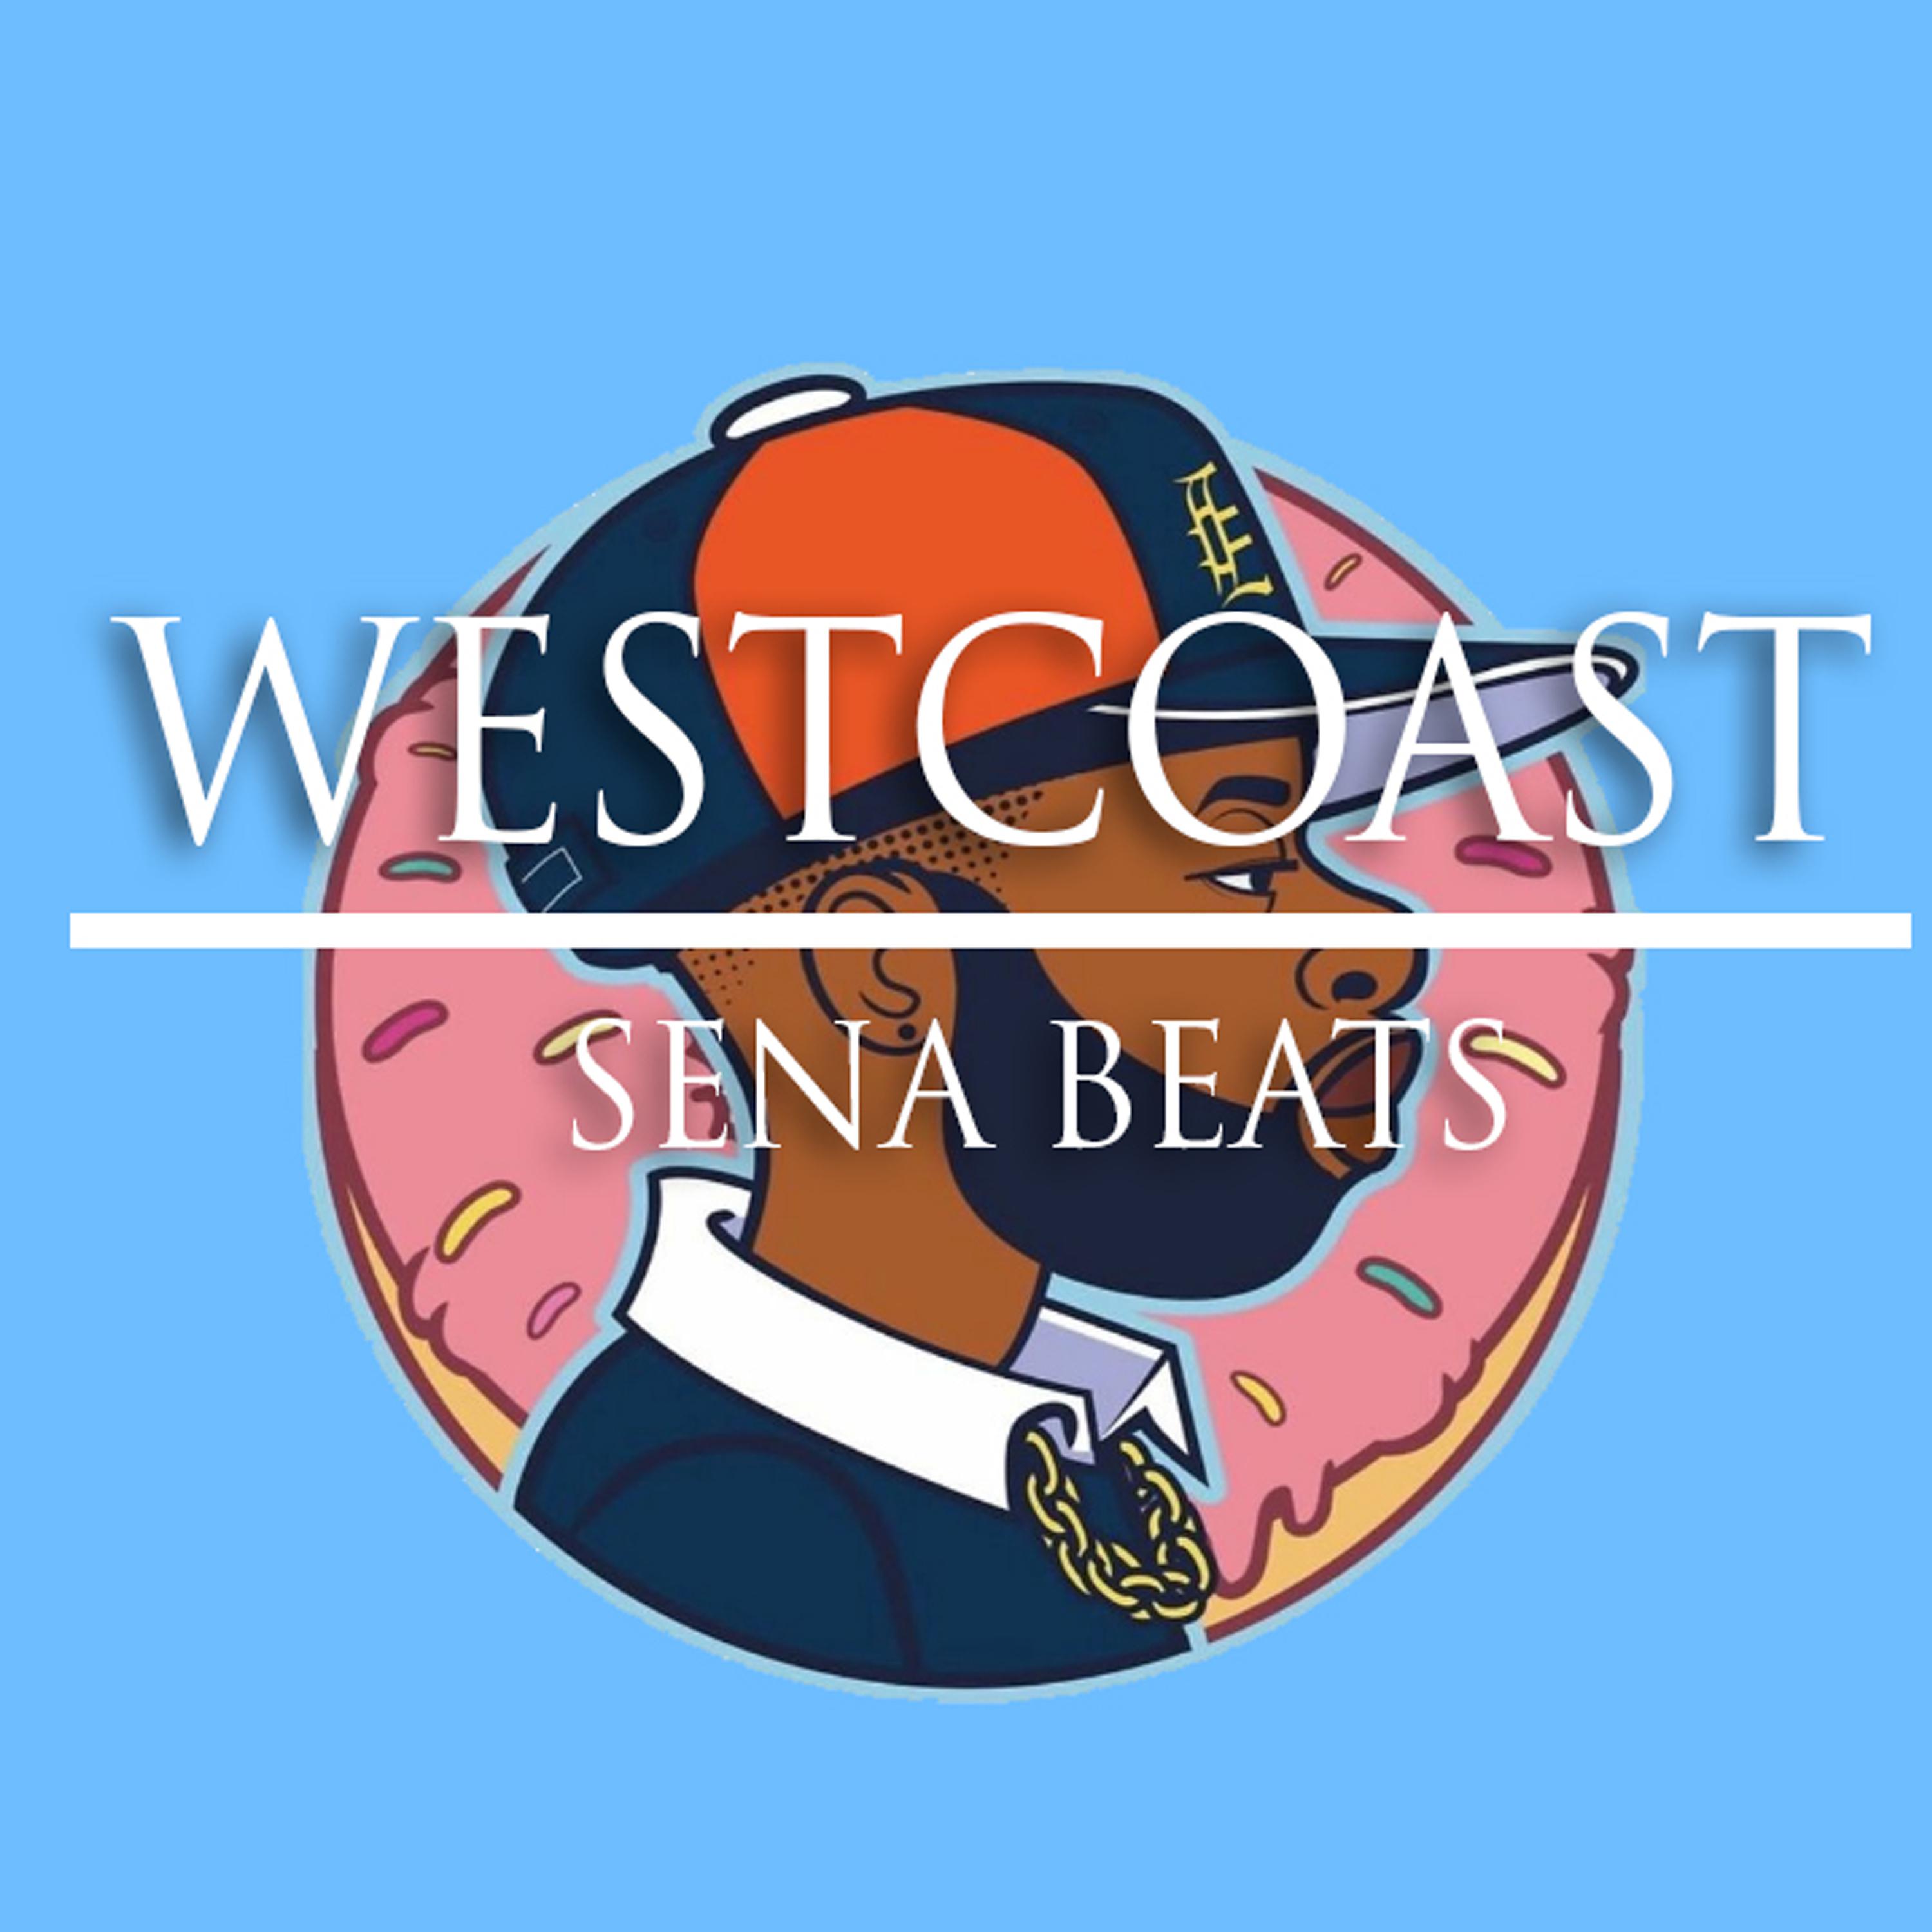 Постер альбома "West Coast" Rap